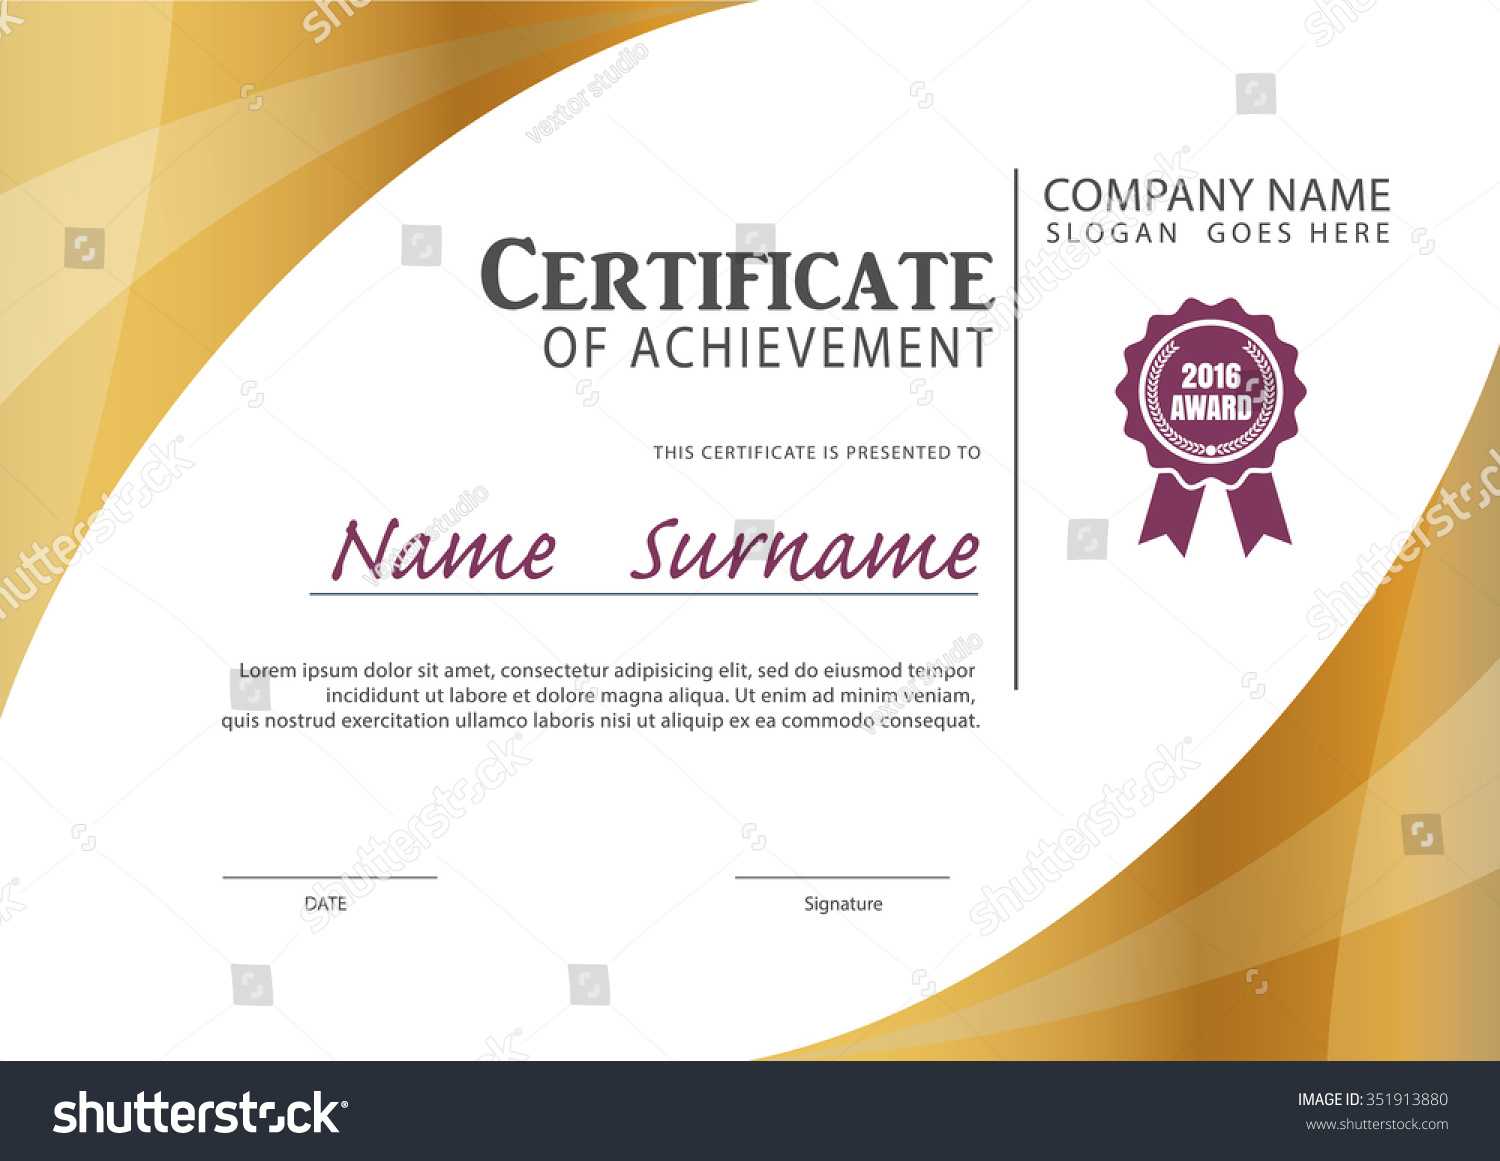 Certificate Templatediploma Layouta4 Size Vector Stock With Certificate Template Size